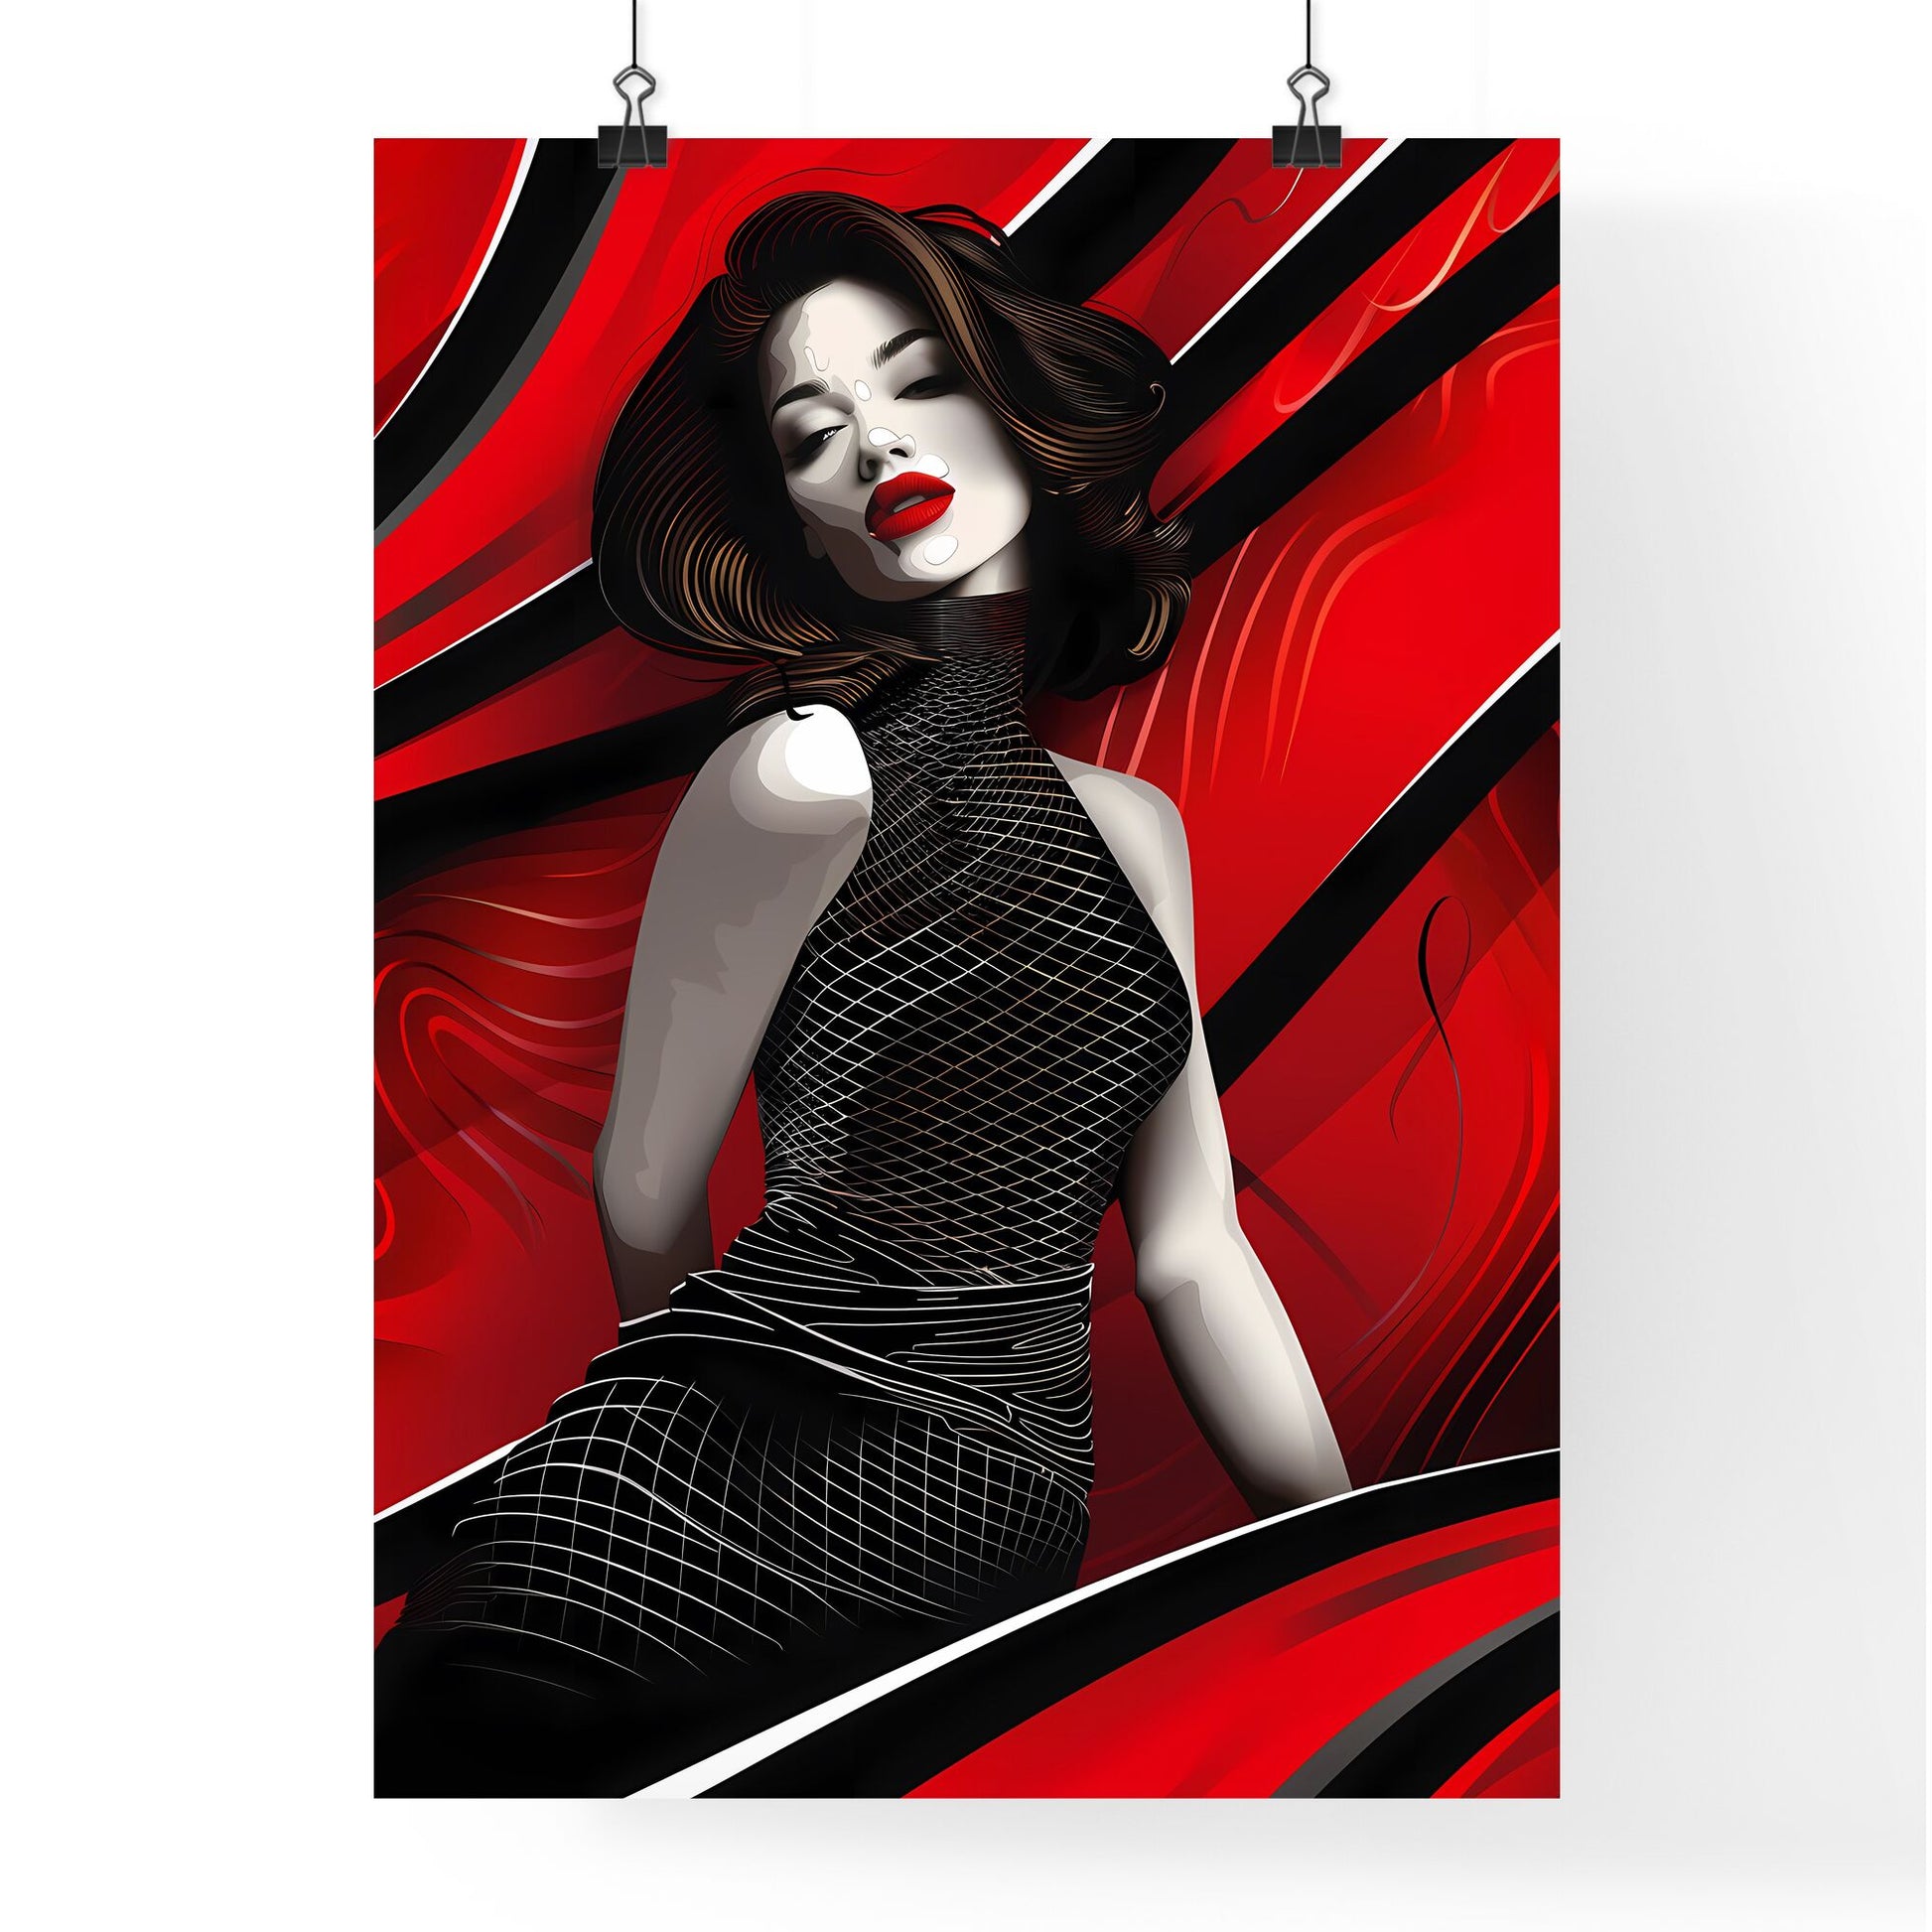 Fashion Illustration Painting, Detailed Female Figure, Red and Black, Moiré Effect, Black Dress, Vibrant Art Default Title